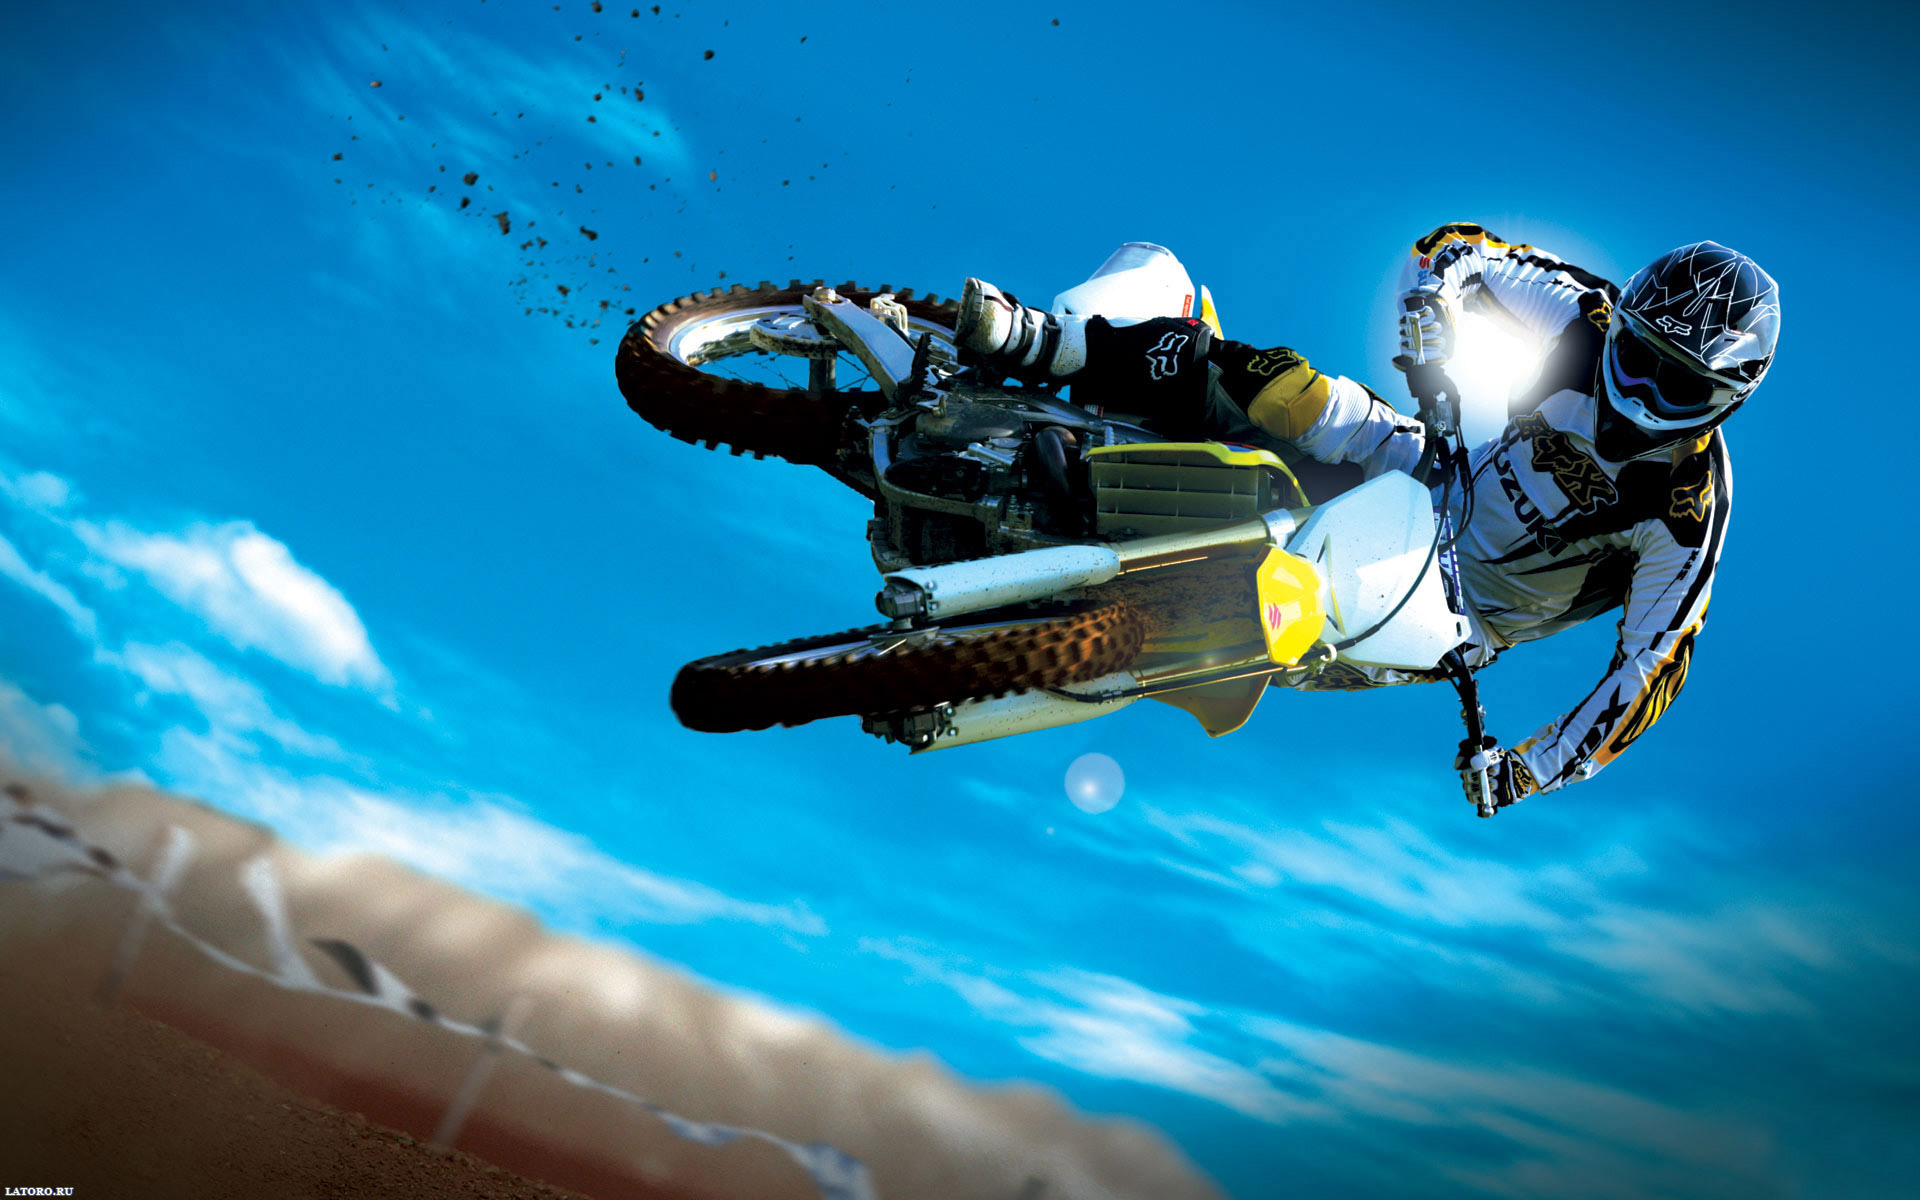 HD Wallpaper Motocross